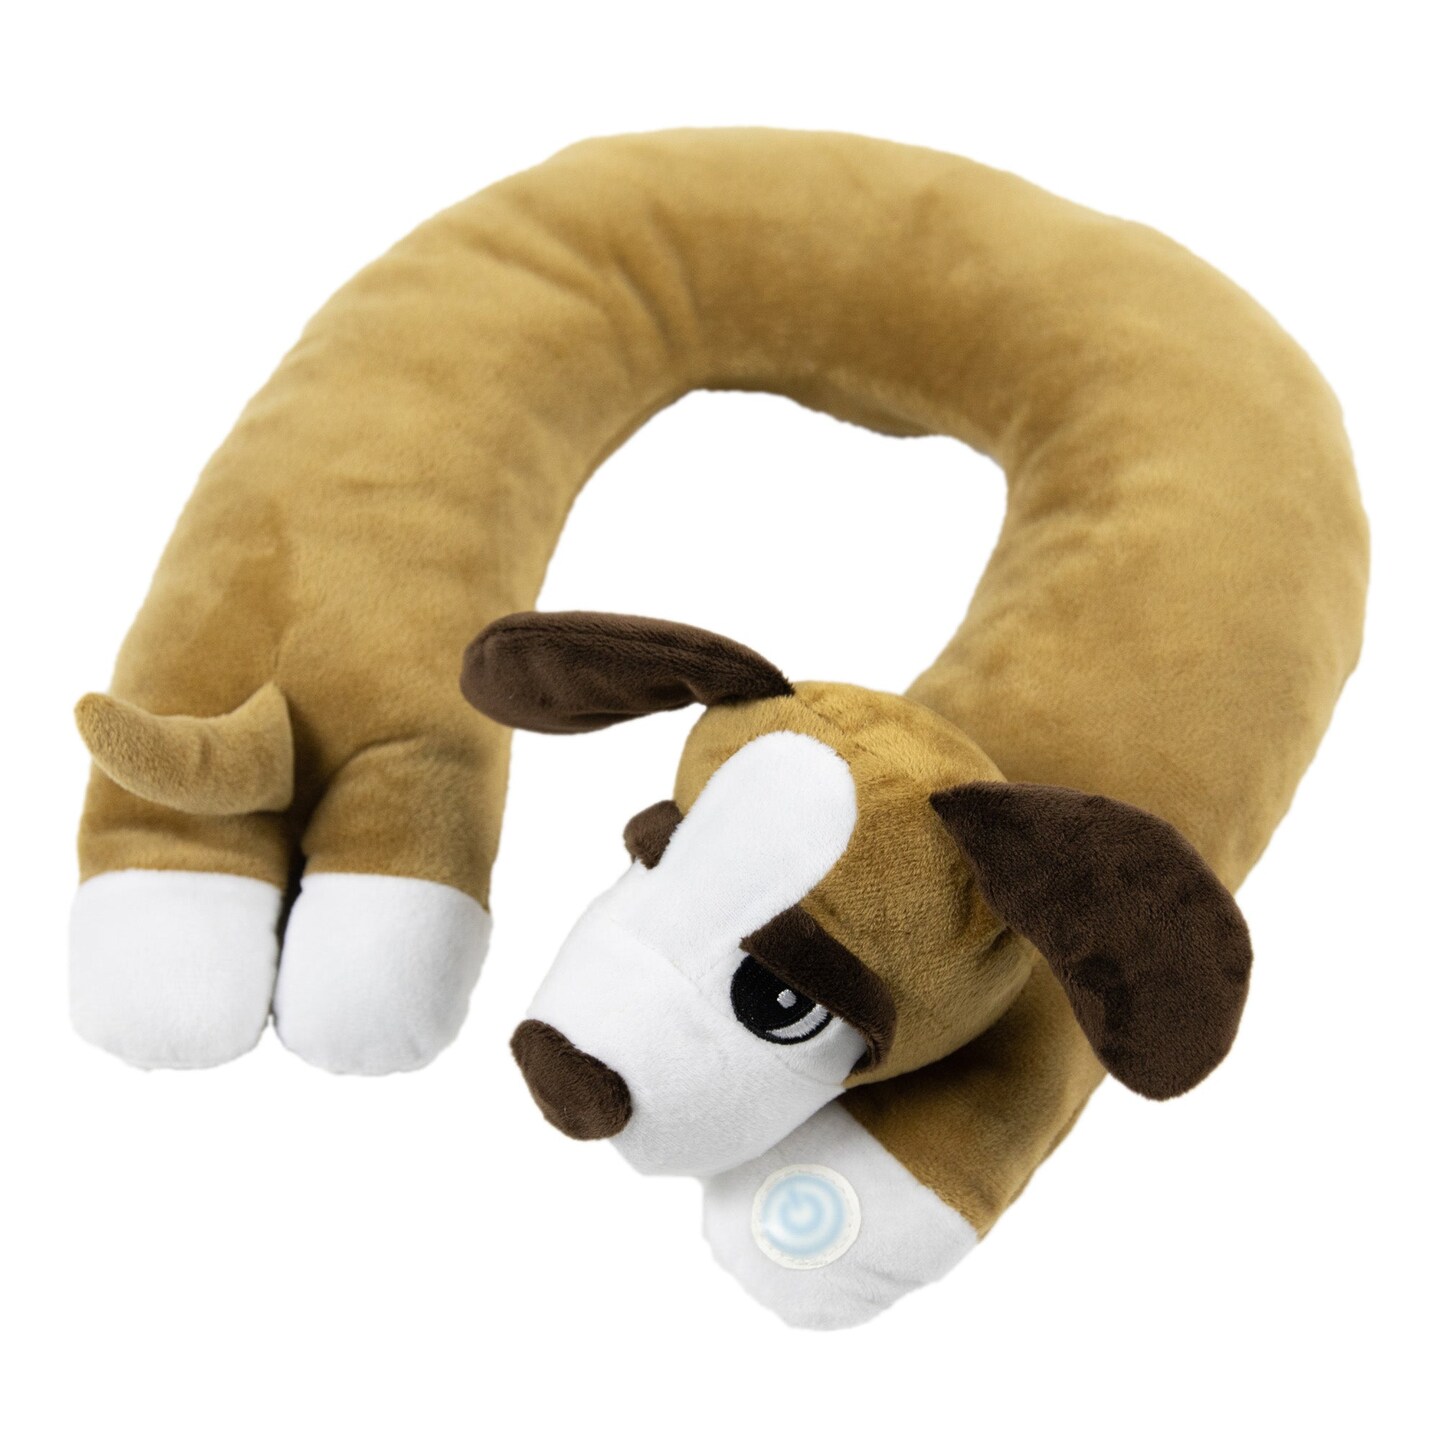 Sensory Vibrating Neck Pillow - Puppy